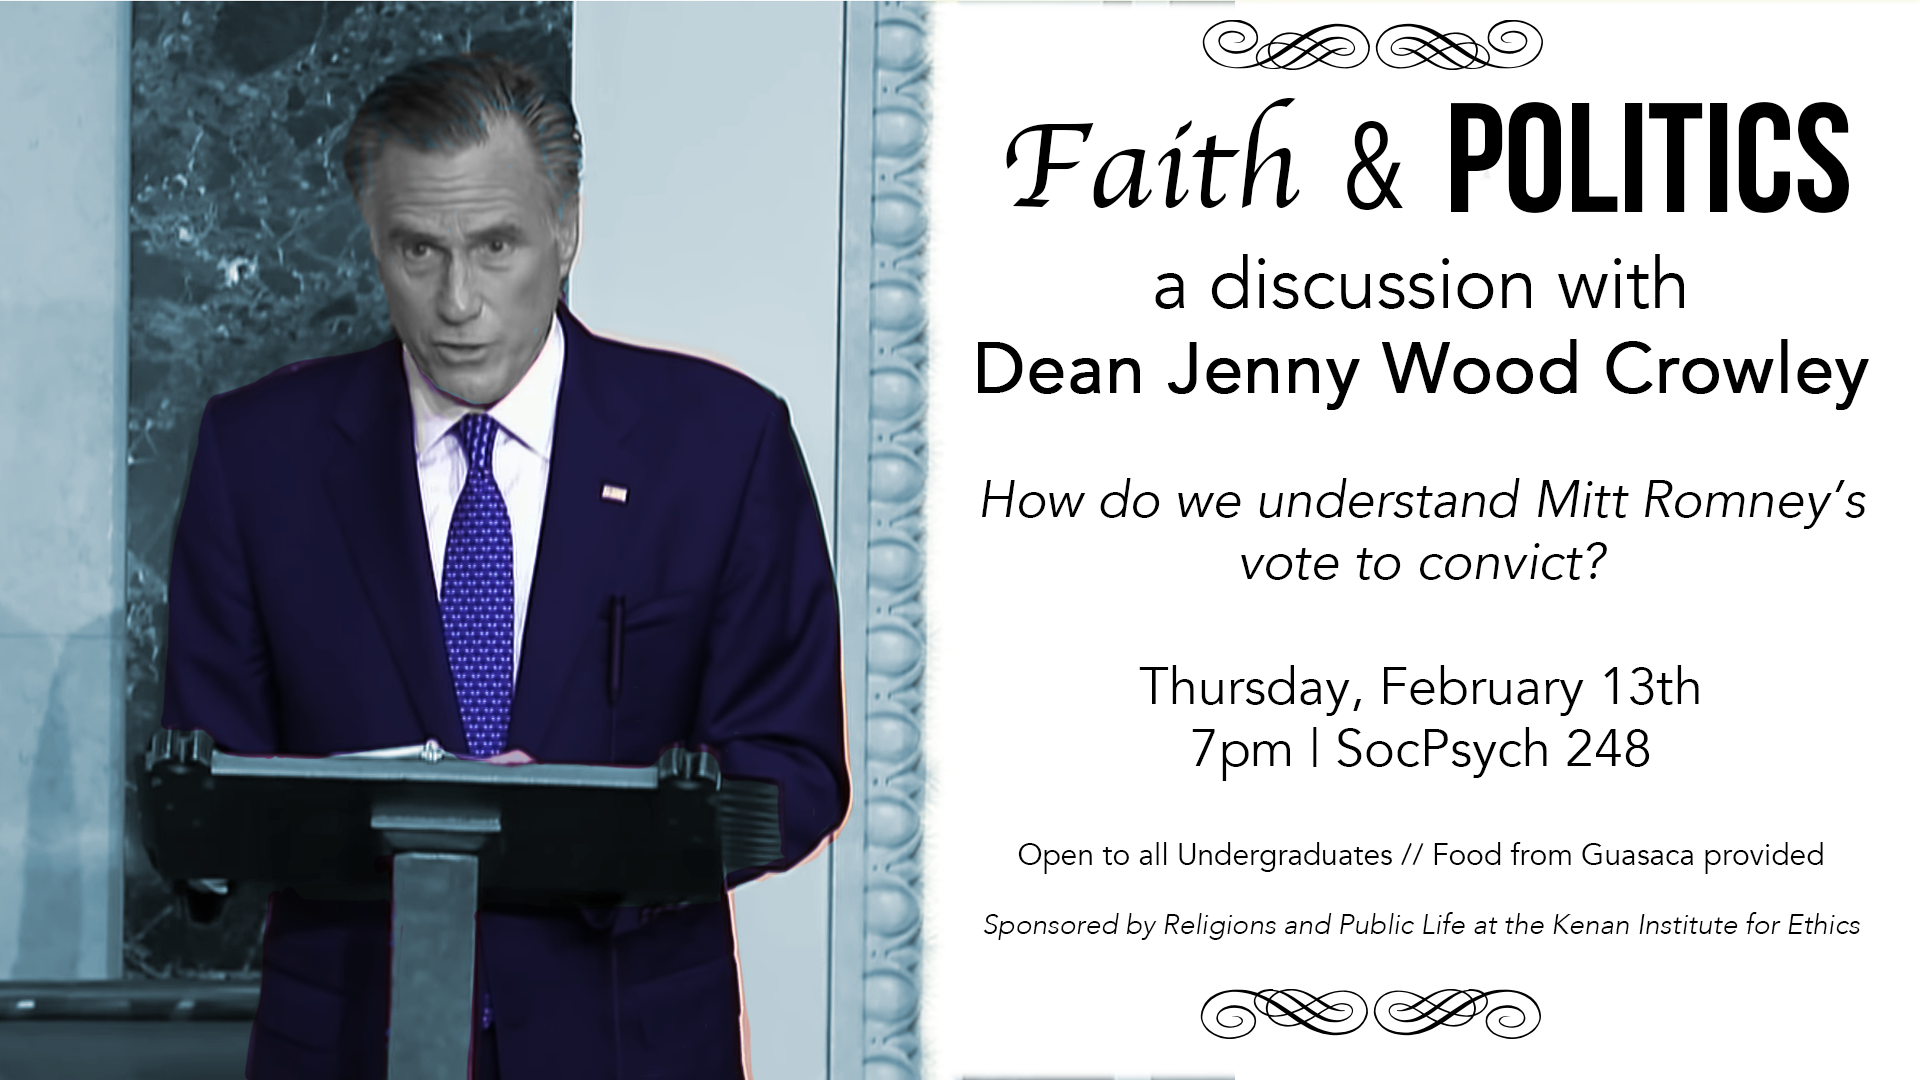 Promotional Flyer for event "Faith & Politics" - info below